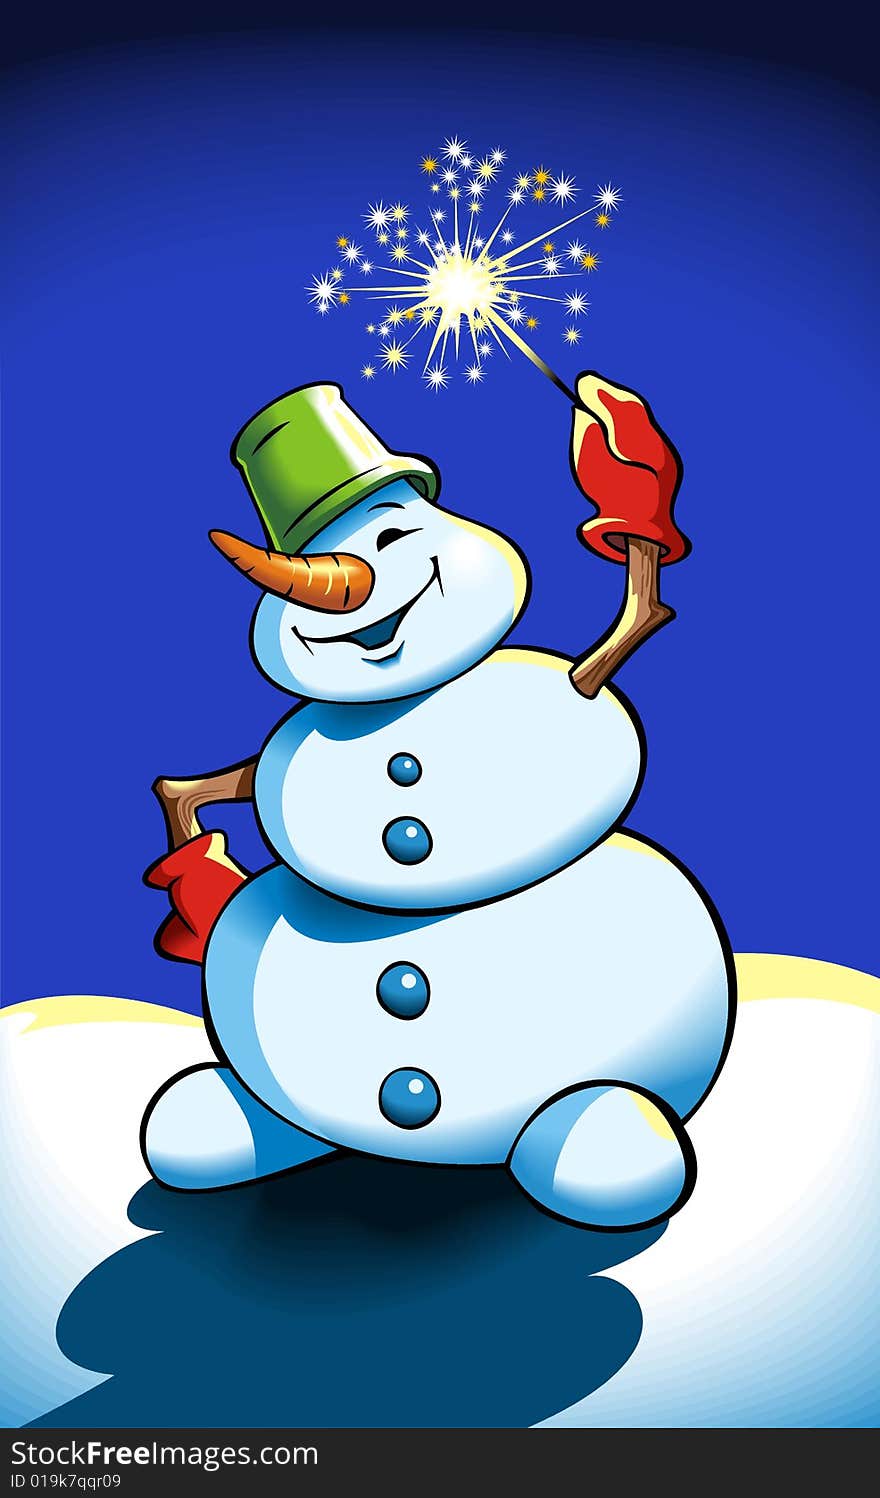 Snowman holding sparkler (Bengal light), vector illustration